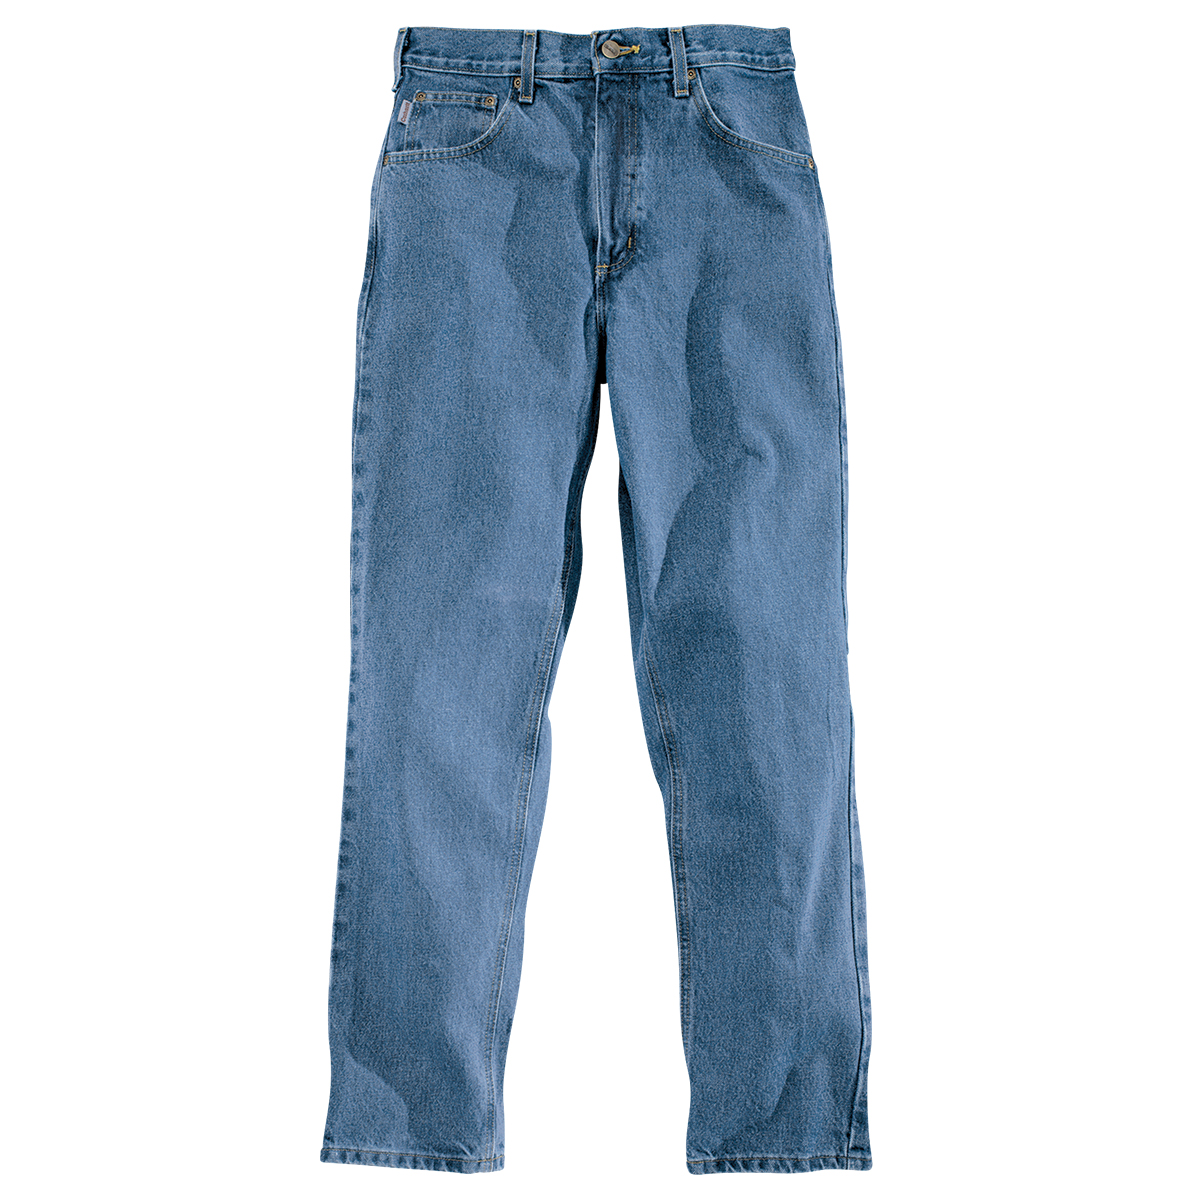 Carhartt Men's B18 Straight Fit Heavyweight 5-Pocket Tapered Jeans